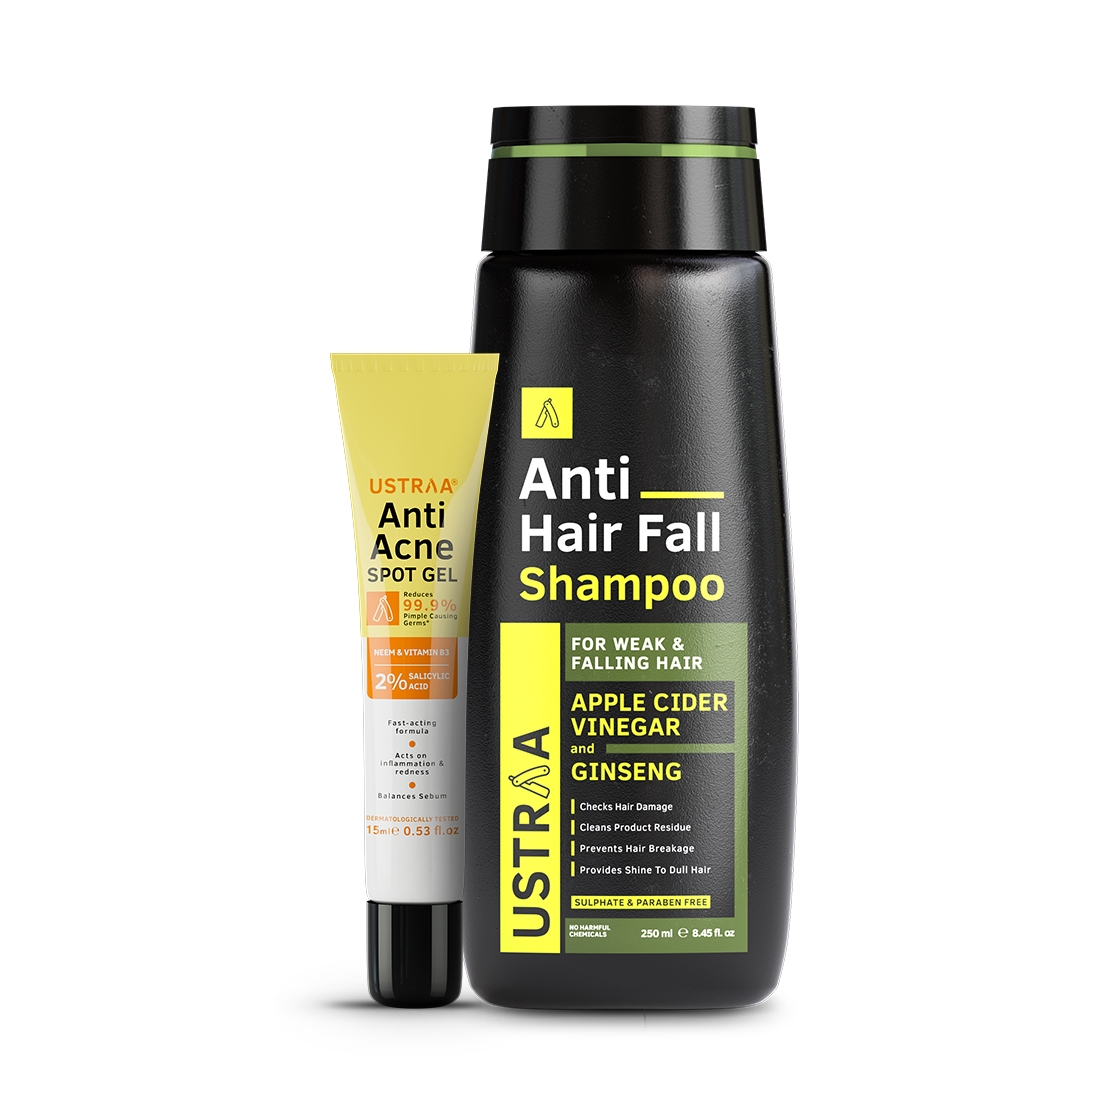 Ustraa Anti Acne Spot Gel - 15ml & Anti Hair Fall Shampoo - 250ml